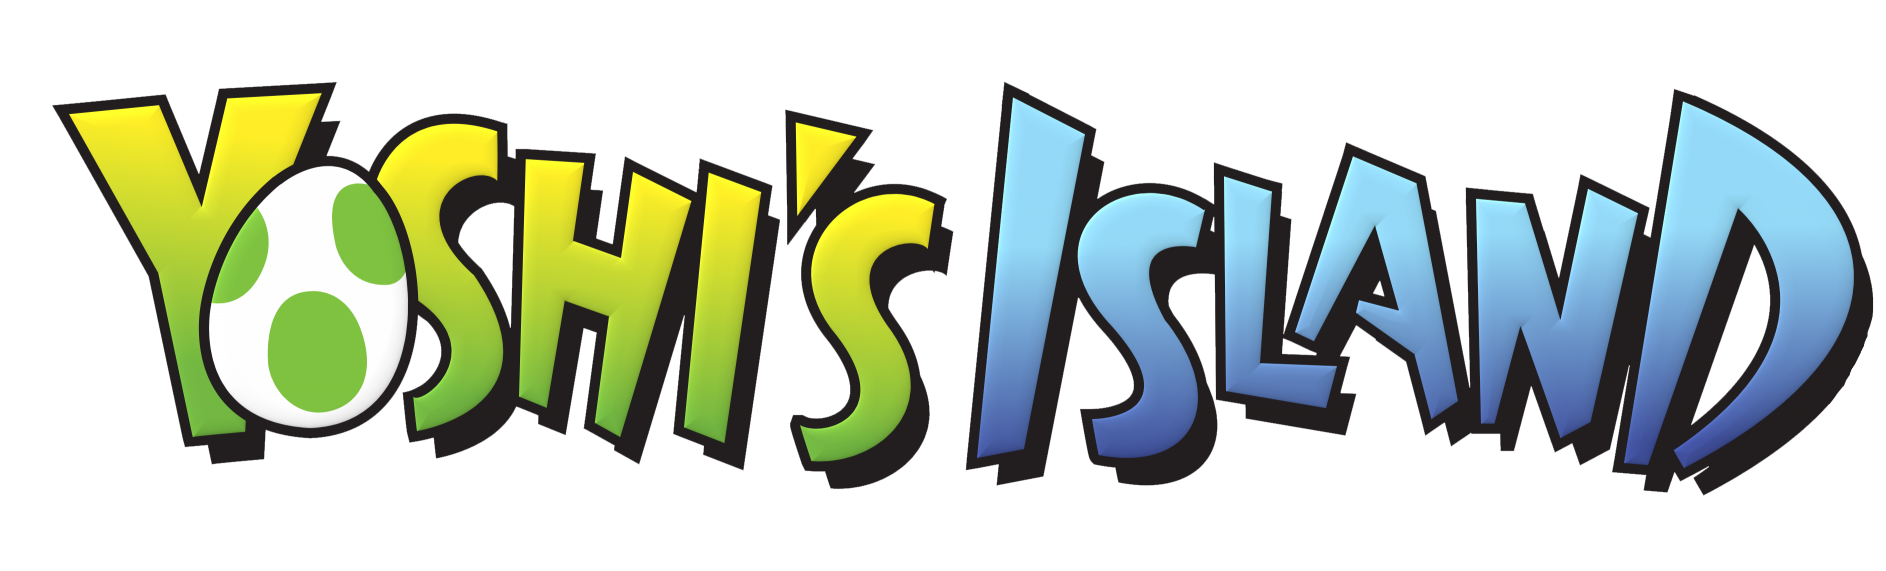 Yoshi's Island Series Logo Blank Meme Template